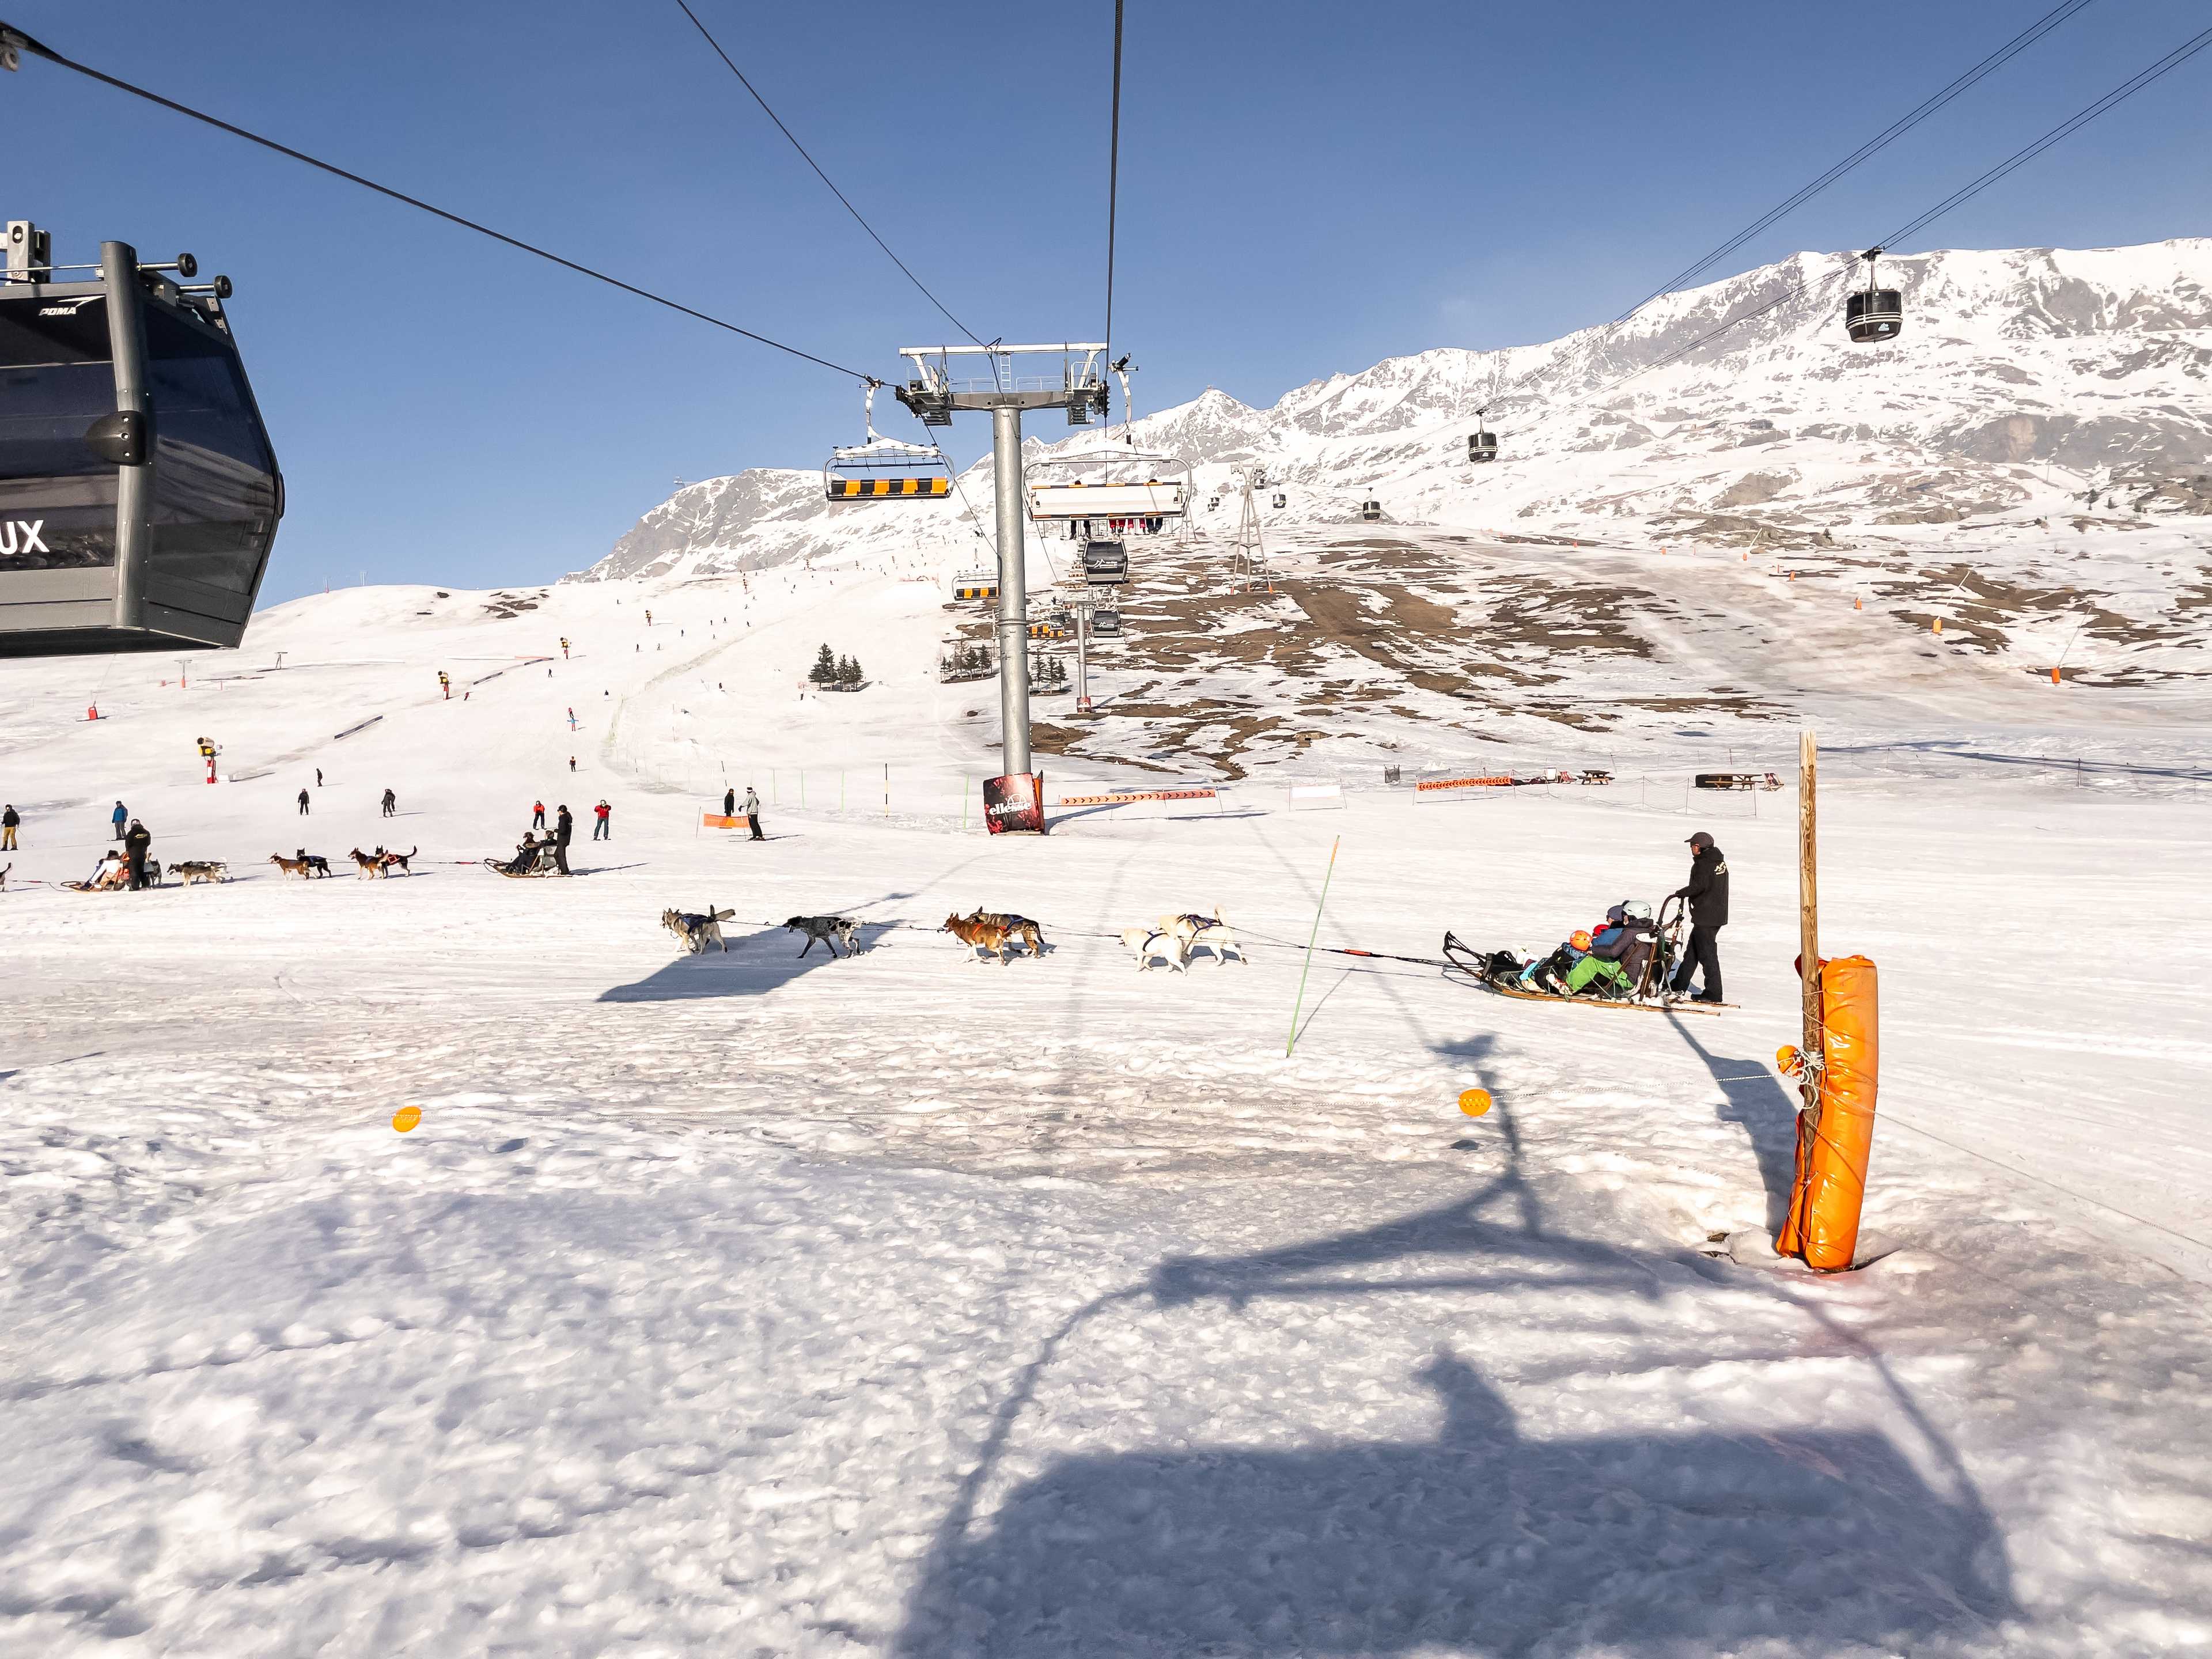 Dog sledding is a popular activity in Alpe d'Huez